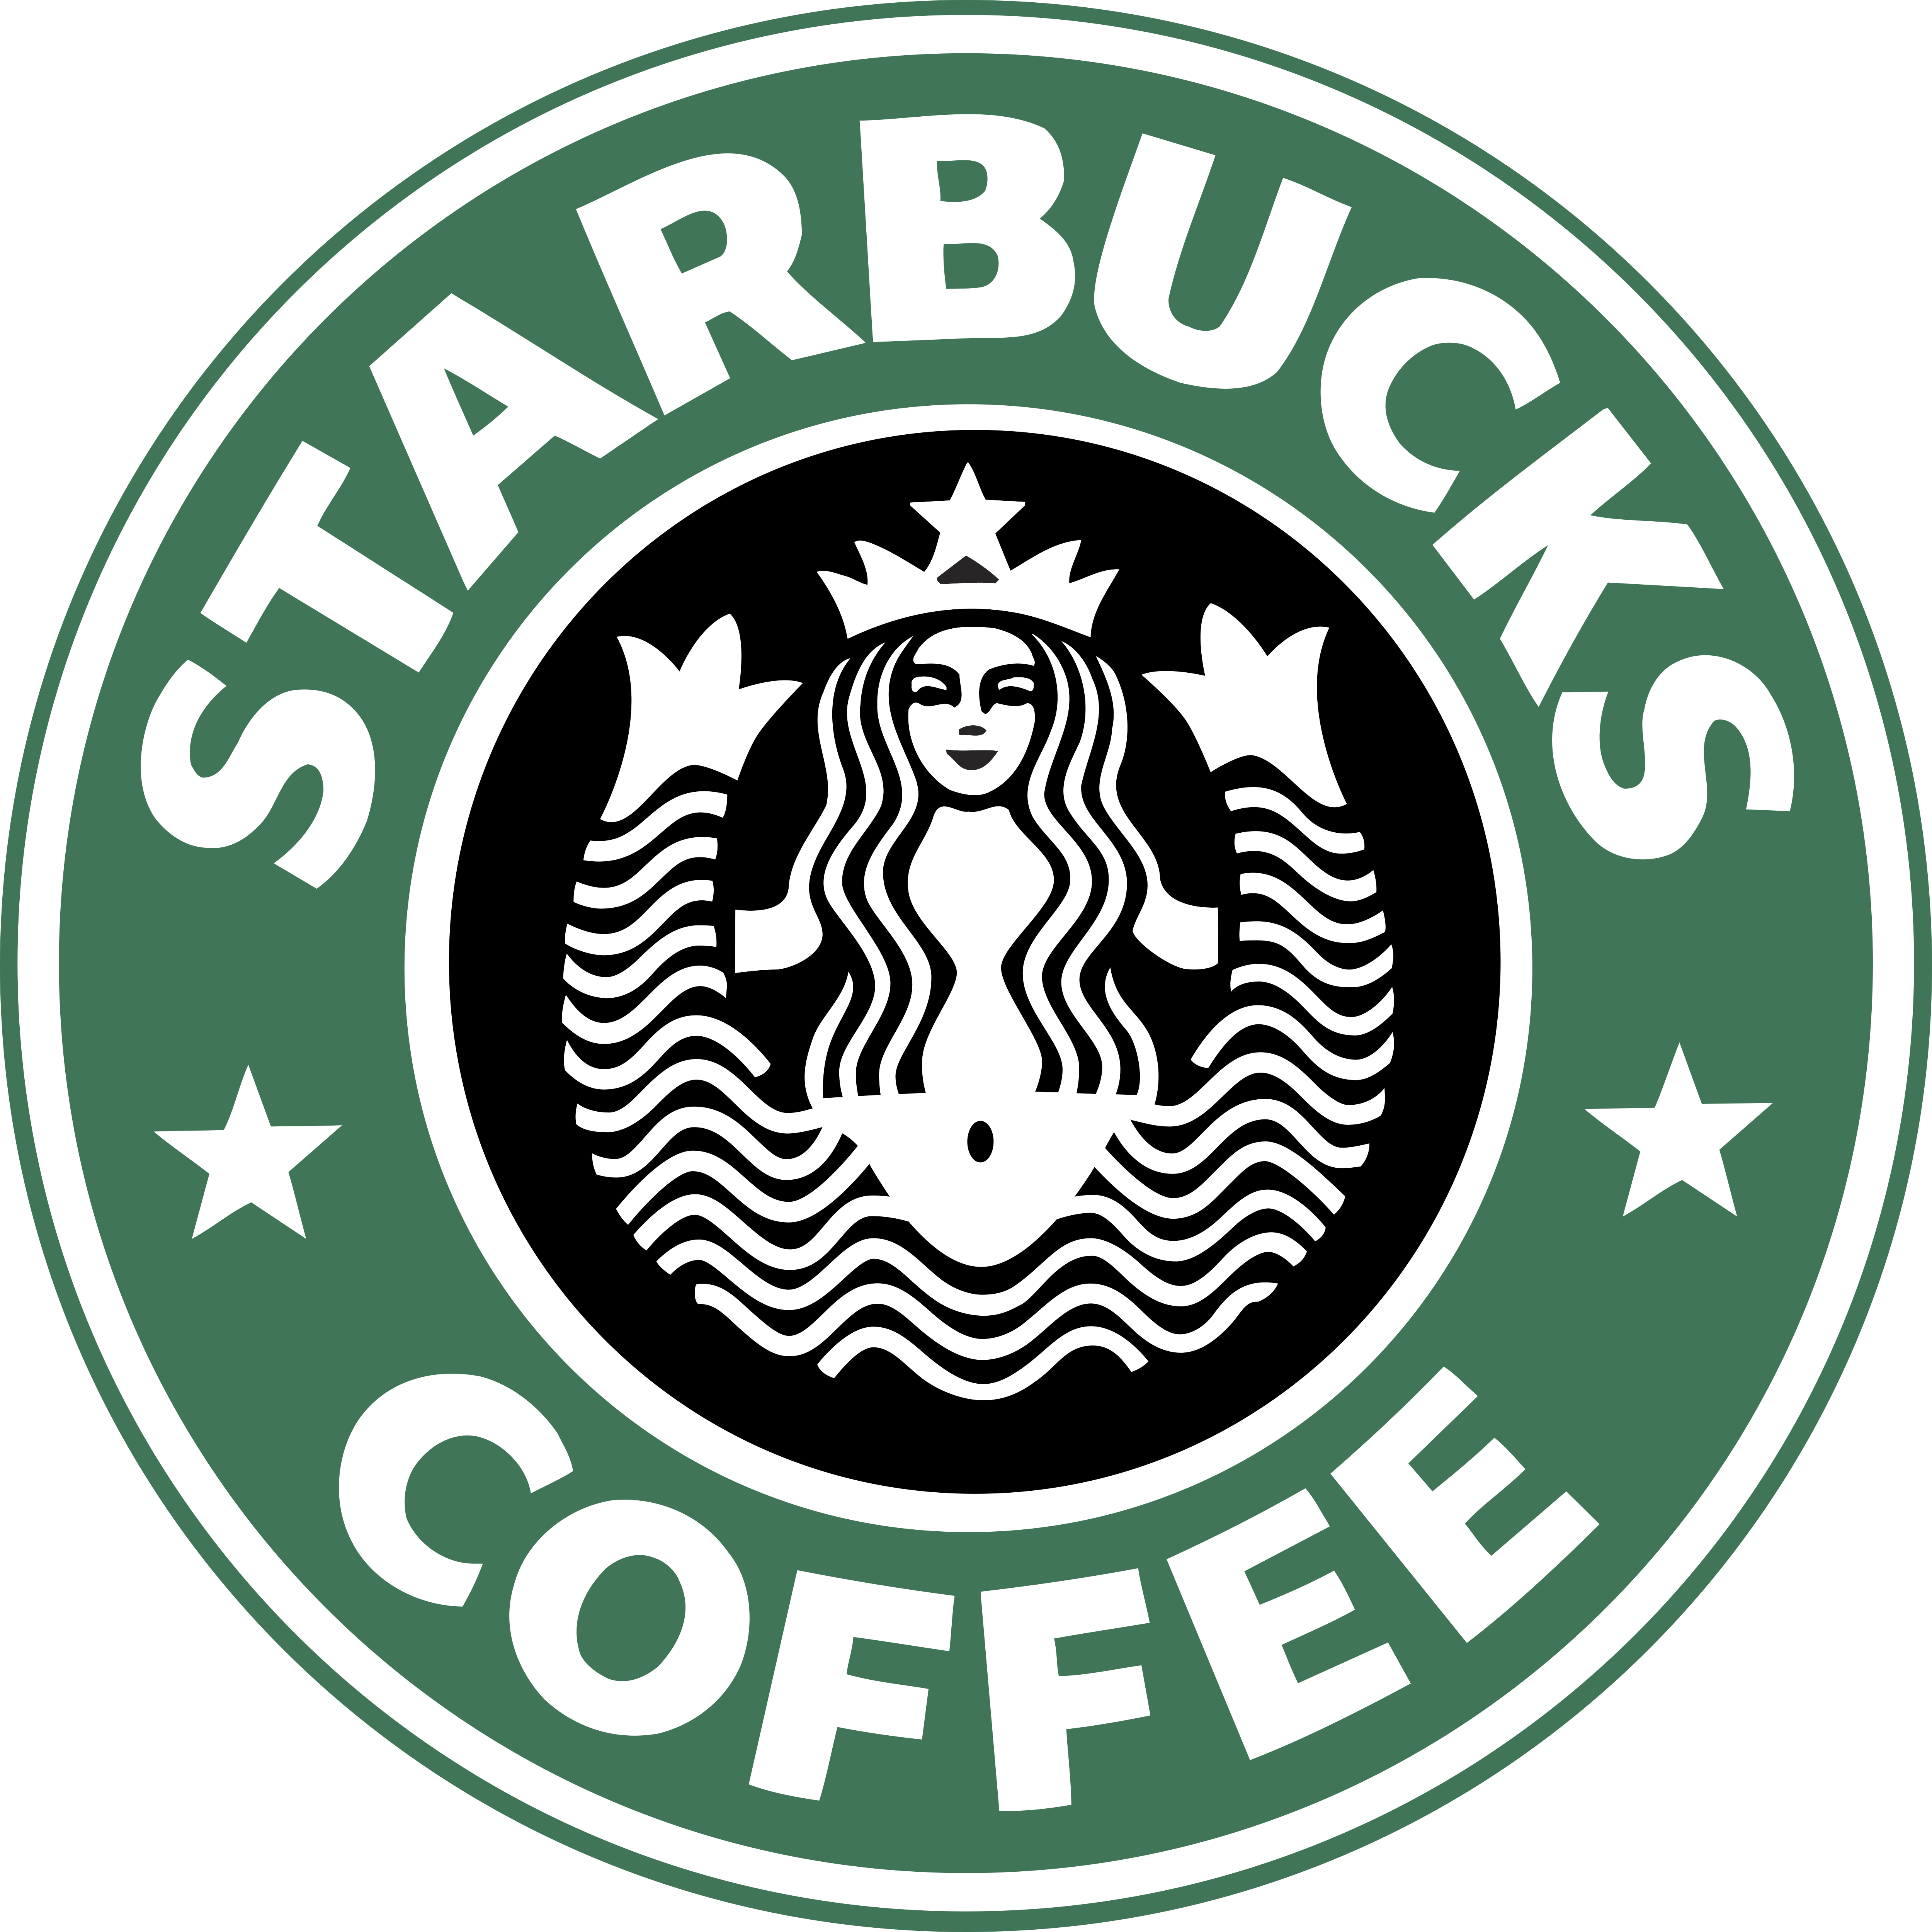 Printable Starbucks Logo